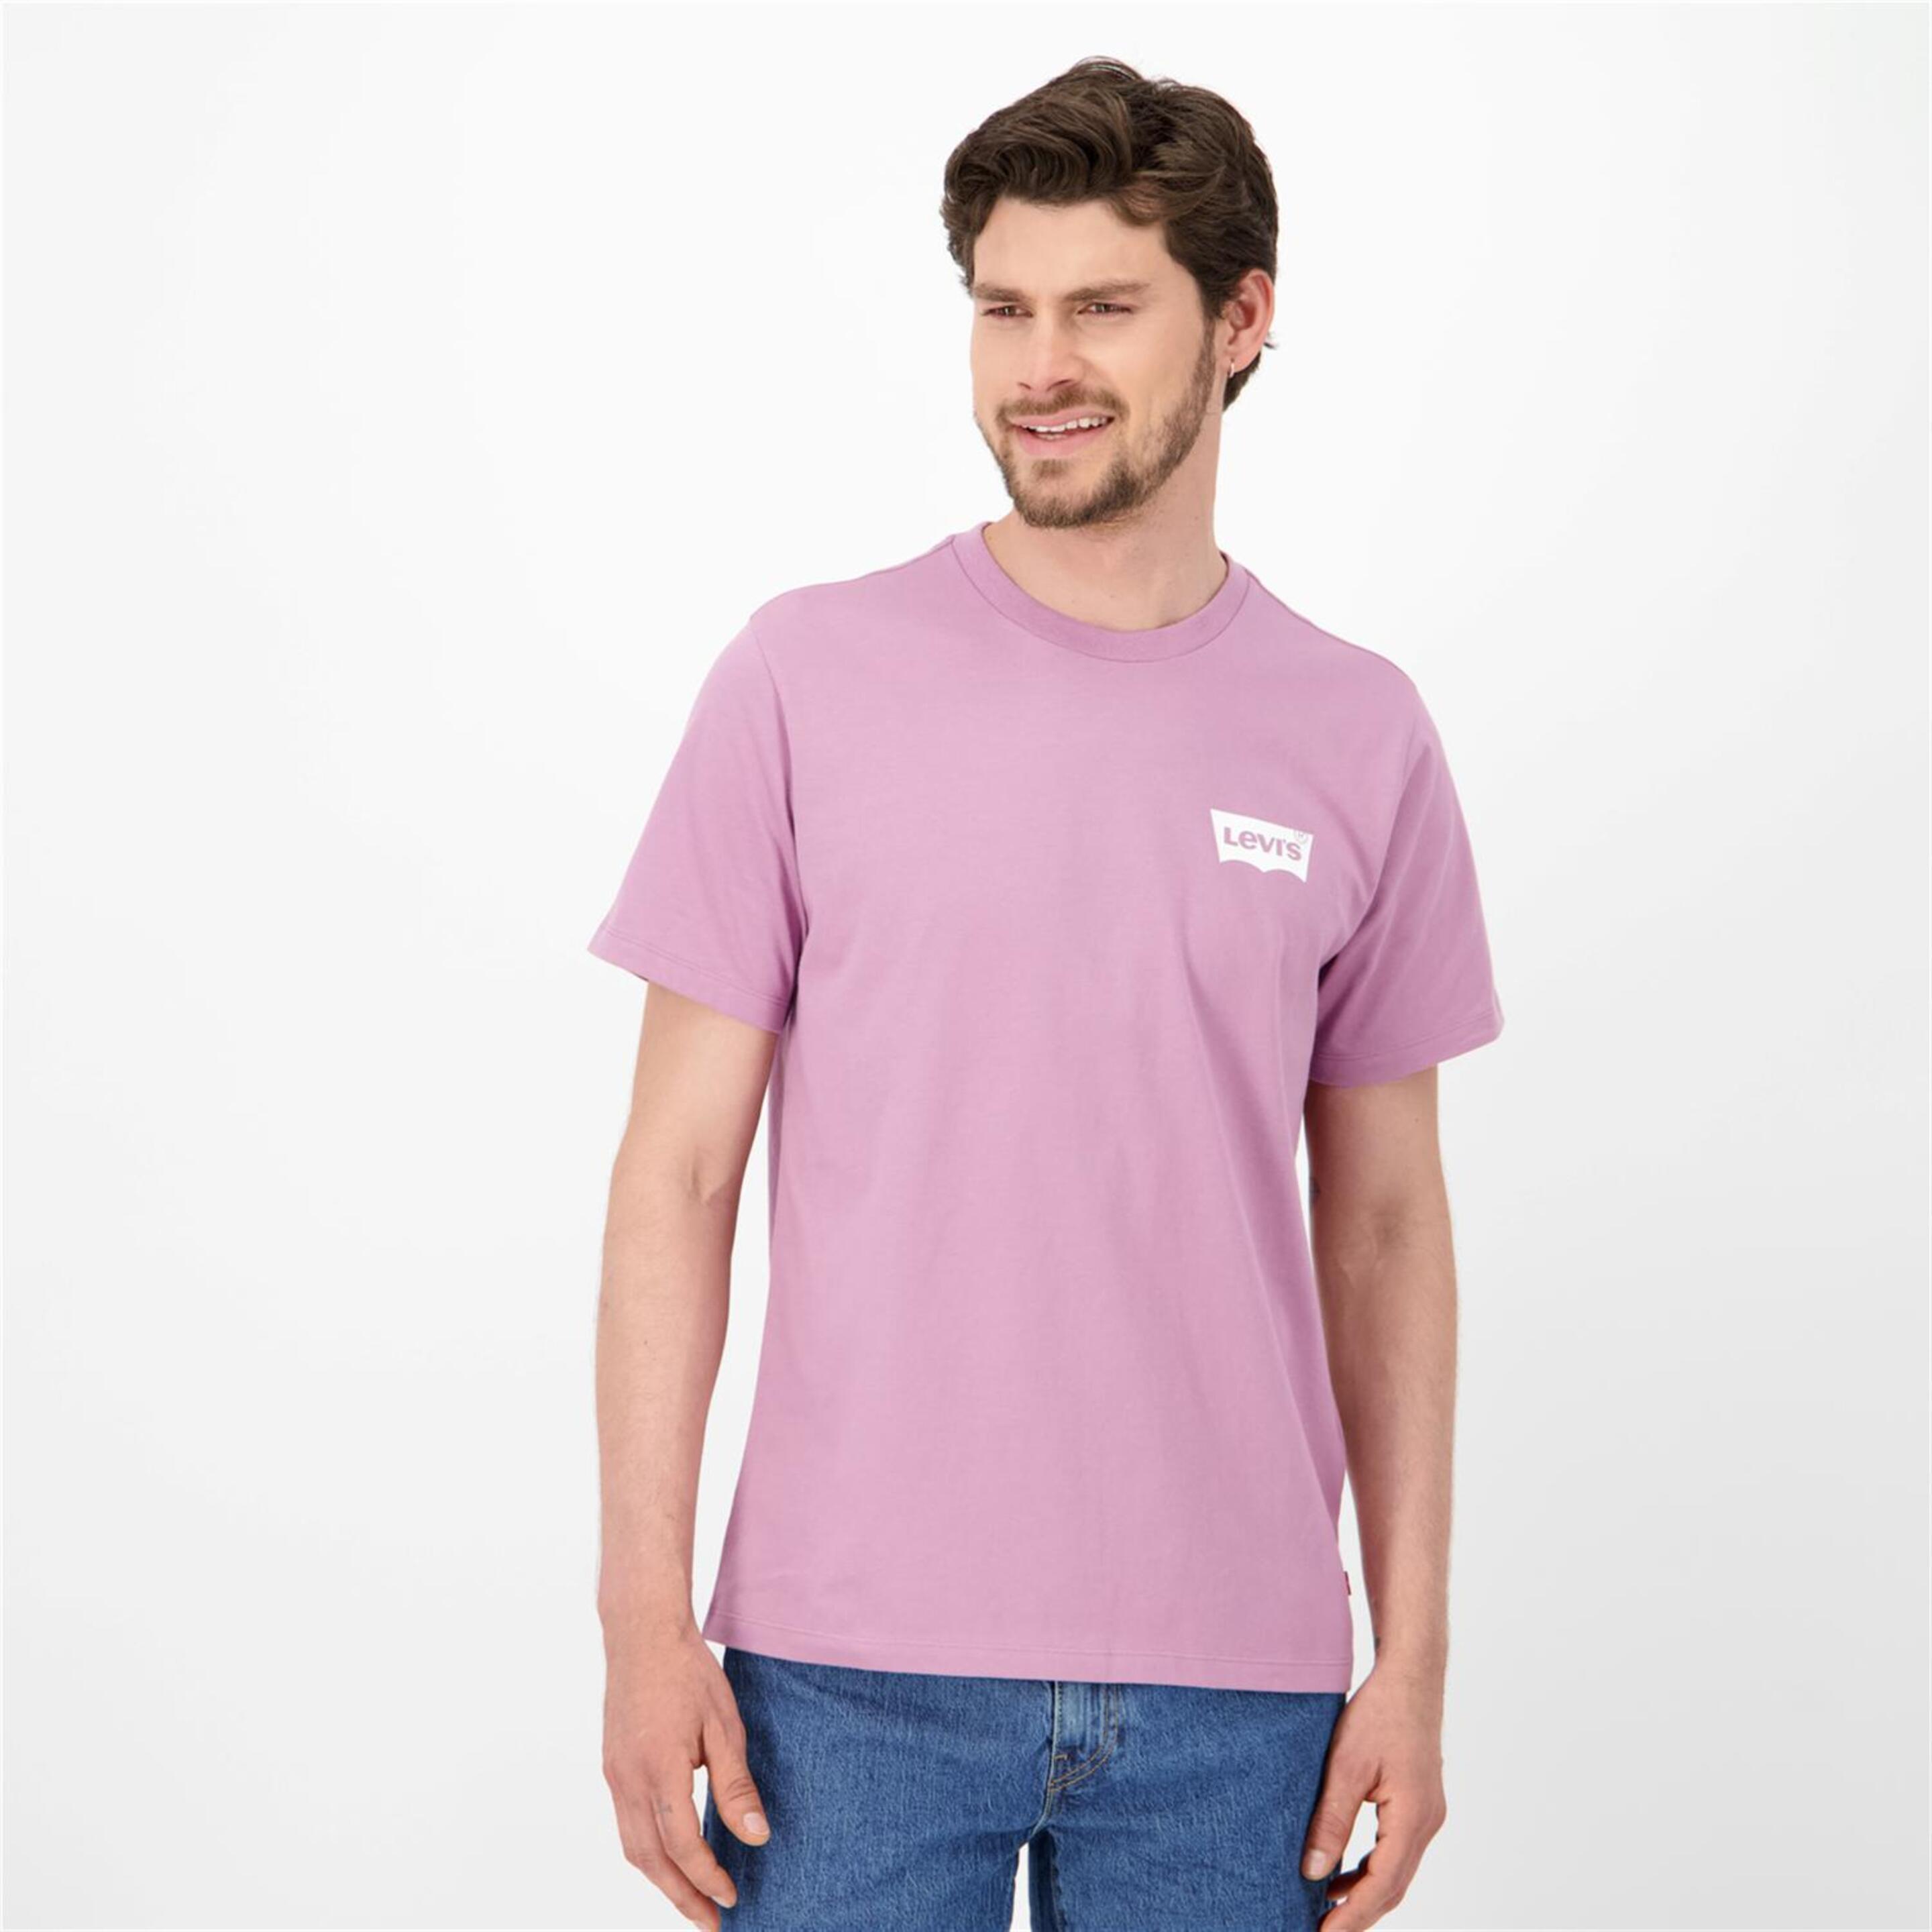 Levi's Graphic - Malva - Camiseta Hombre